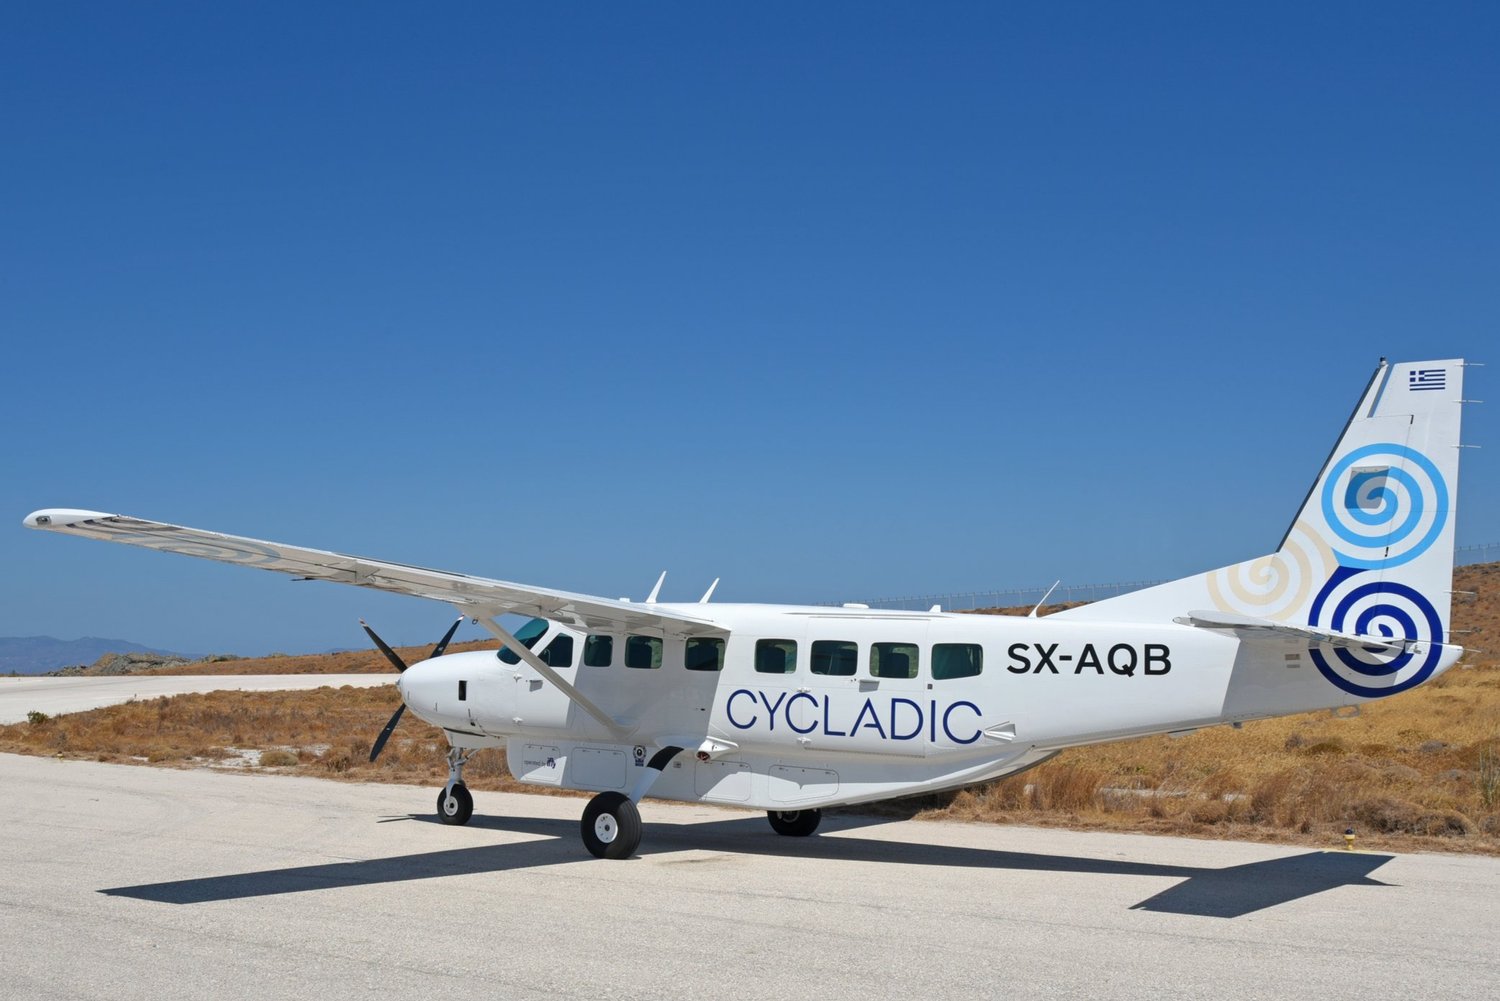 MONTE and regional airline Cycladic partner to explore zero-emission fleet retrofit